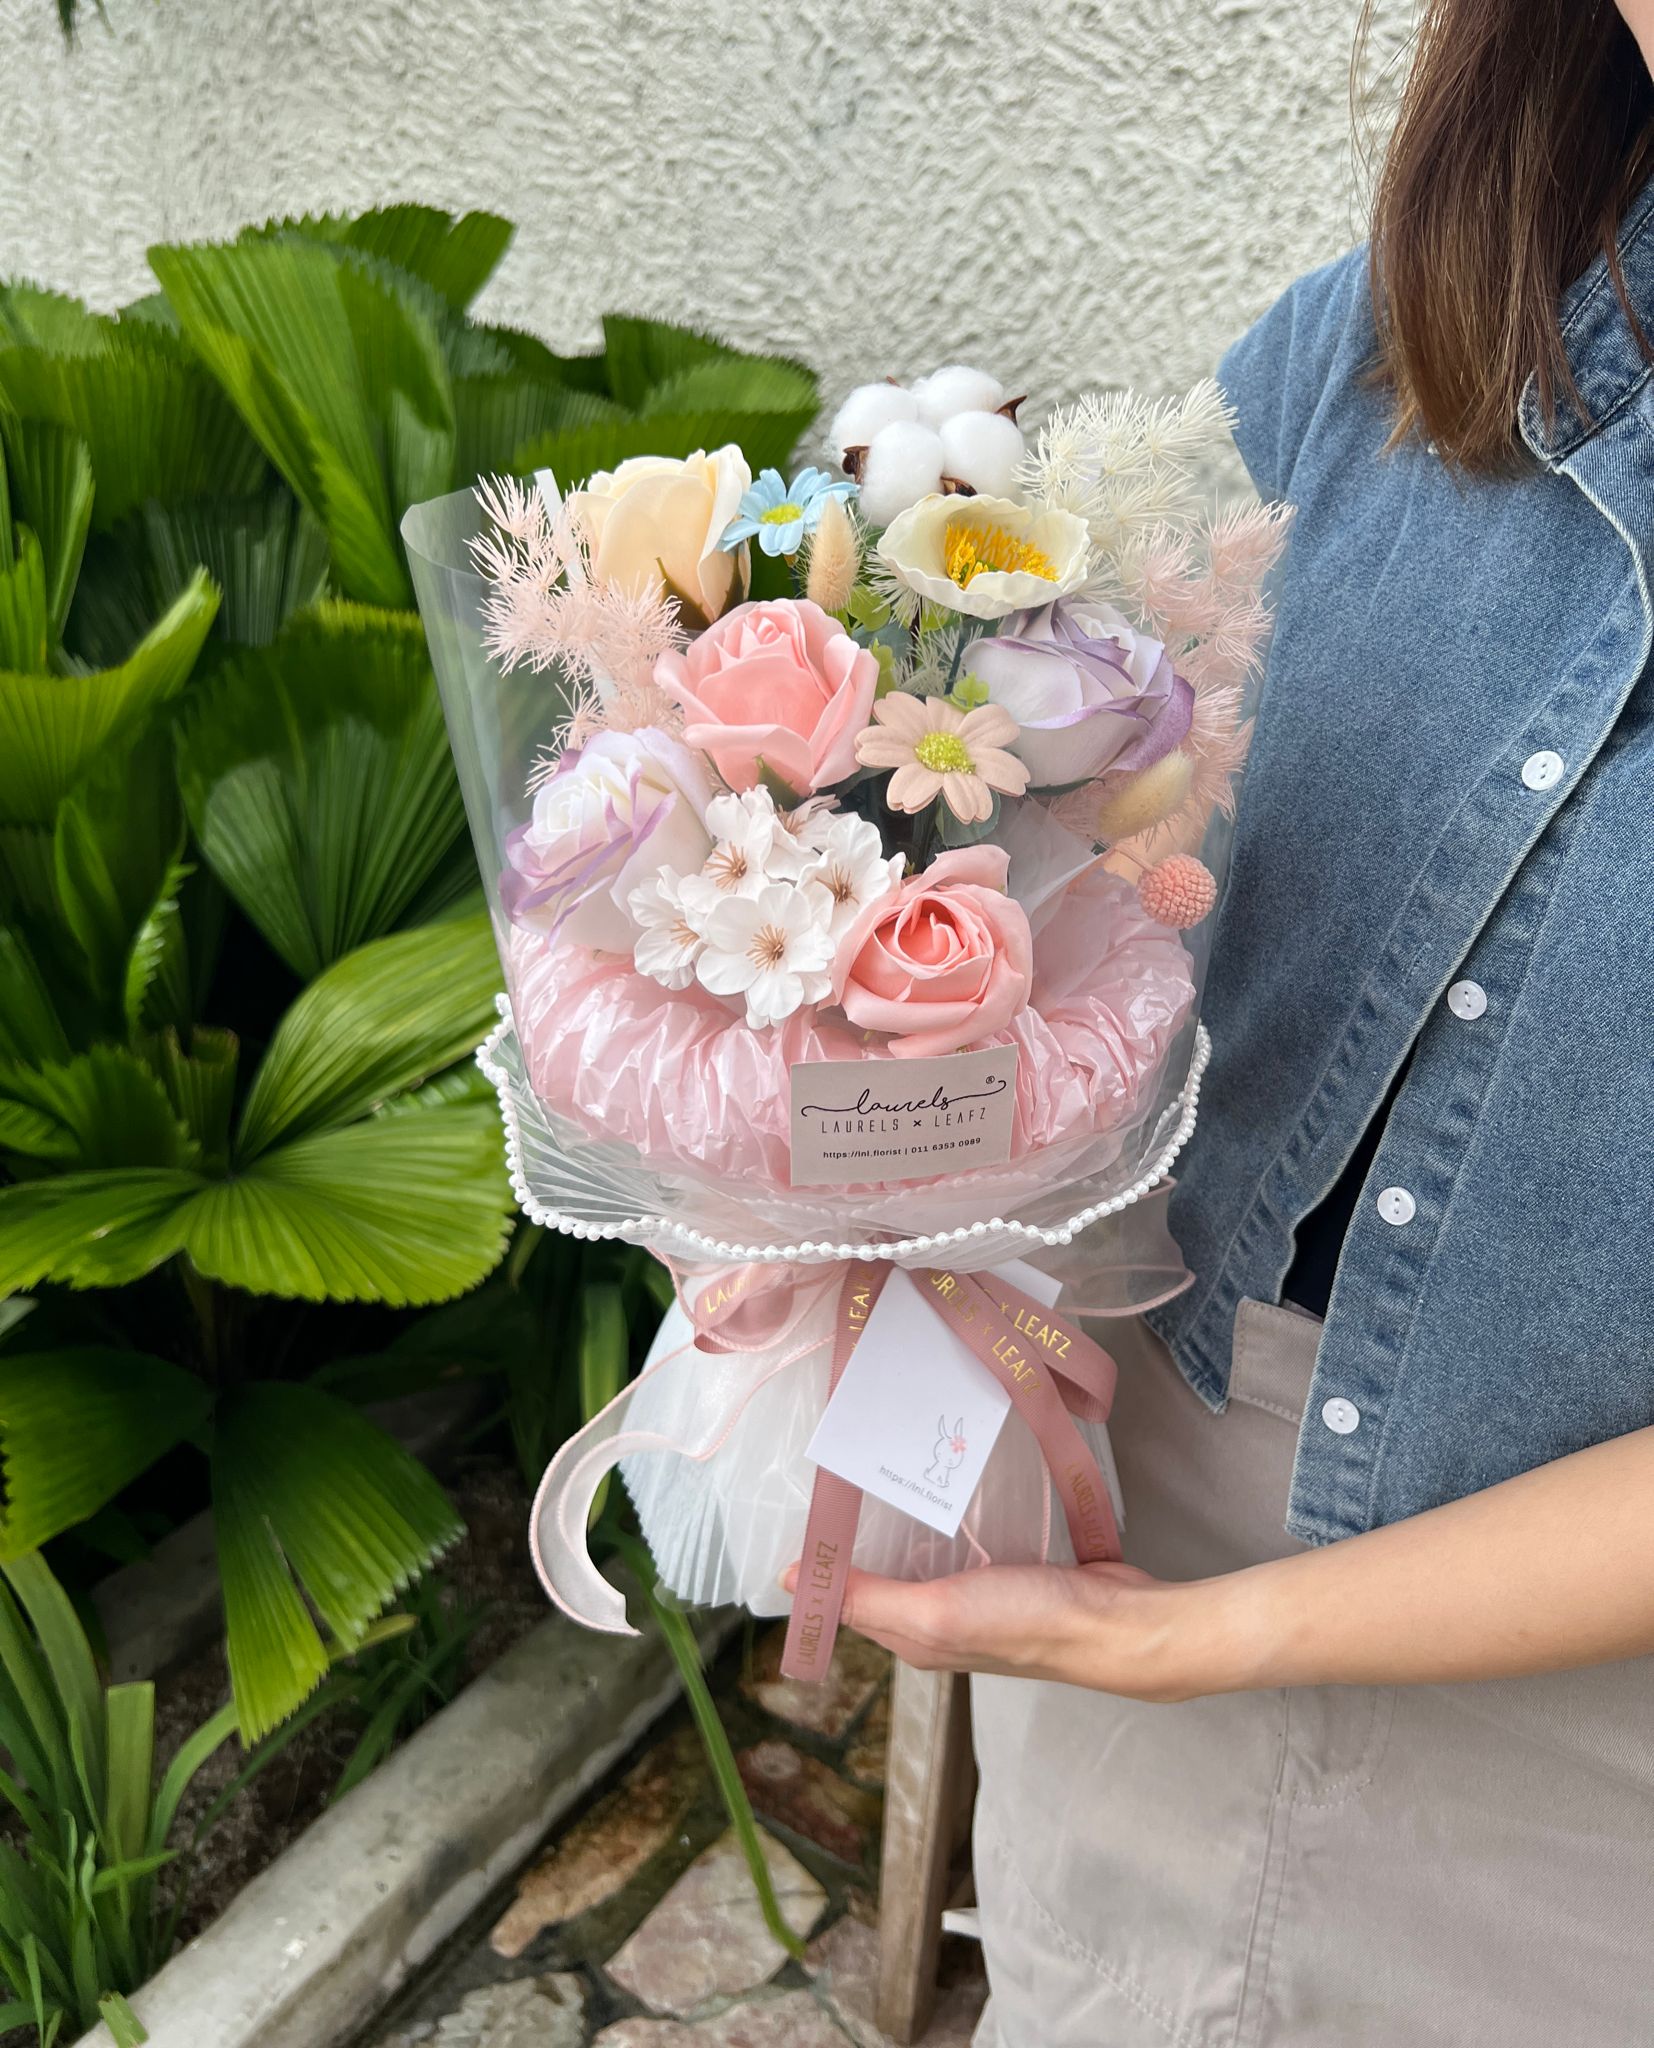 Valentine's Day Special Promotion - Sweetie Soap Flower Bouquet | LnL Florist